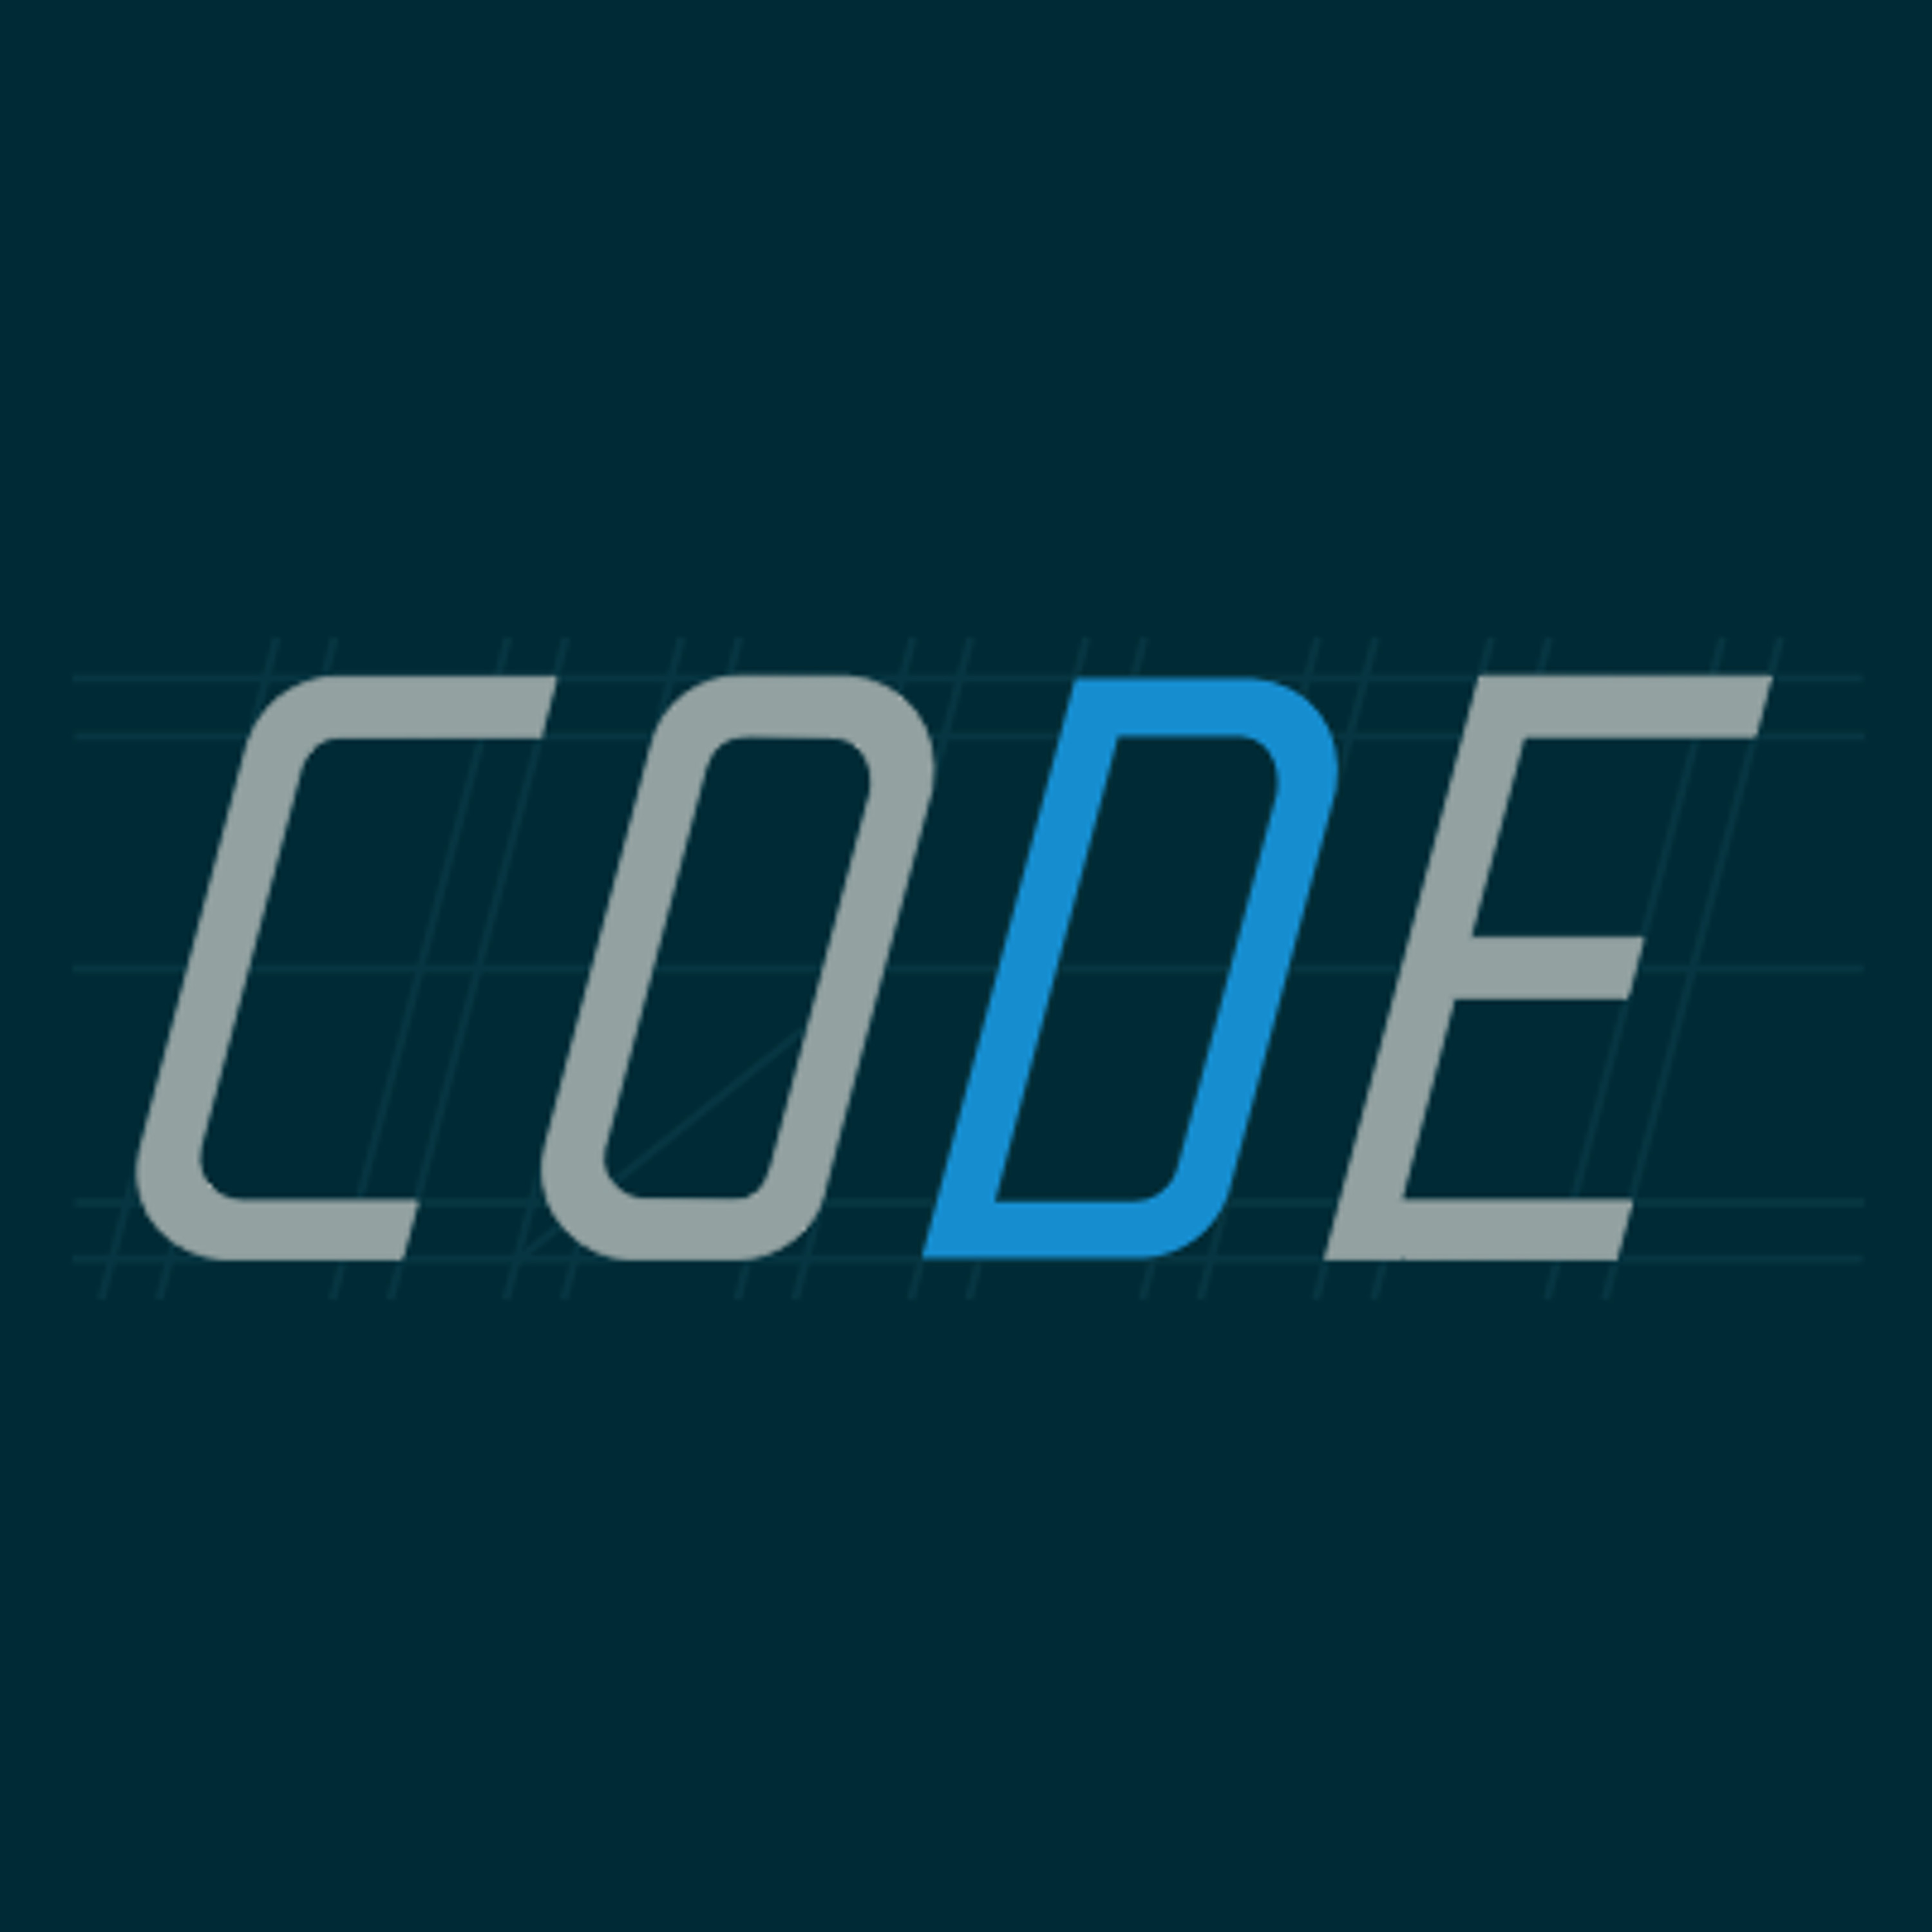 Code Podcast